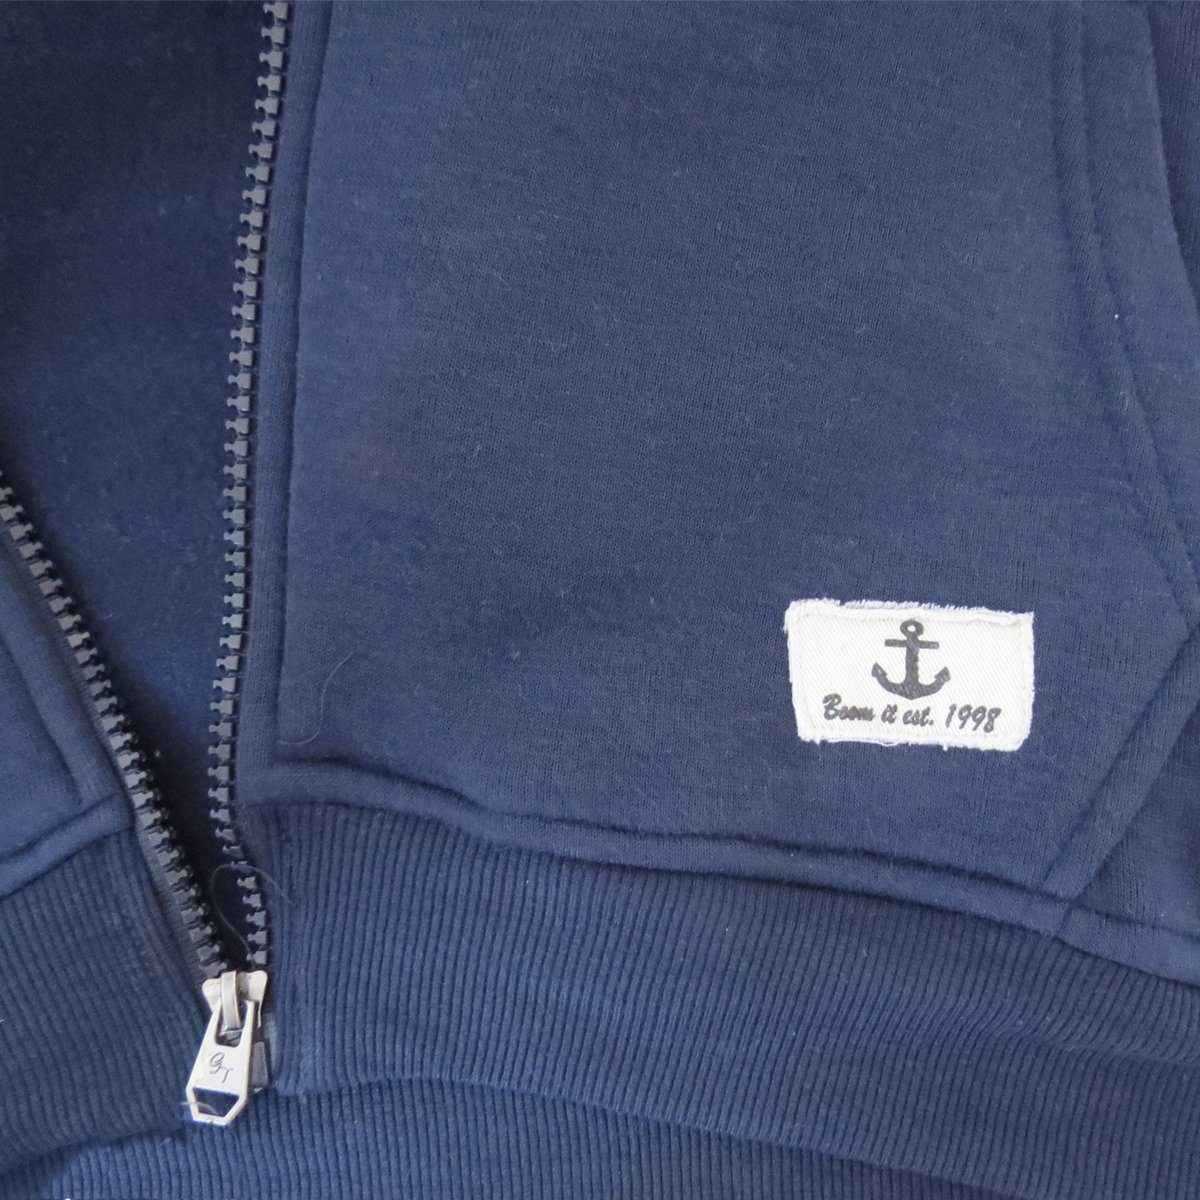 unifarben Sweatjacke "Hamburg" Herren T-Shirt Sonia Jacke Hoodie bestickt marine Originelli